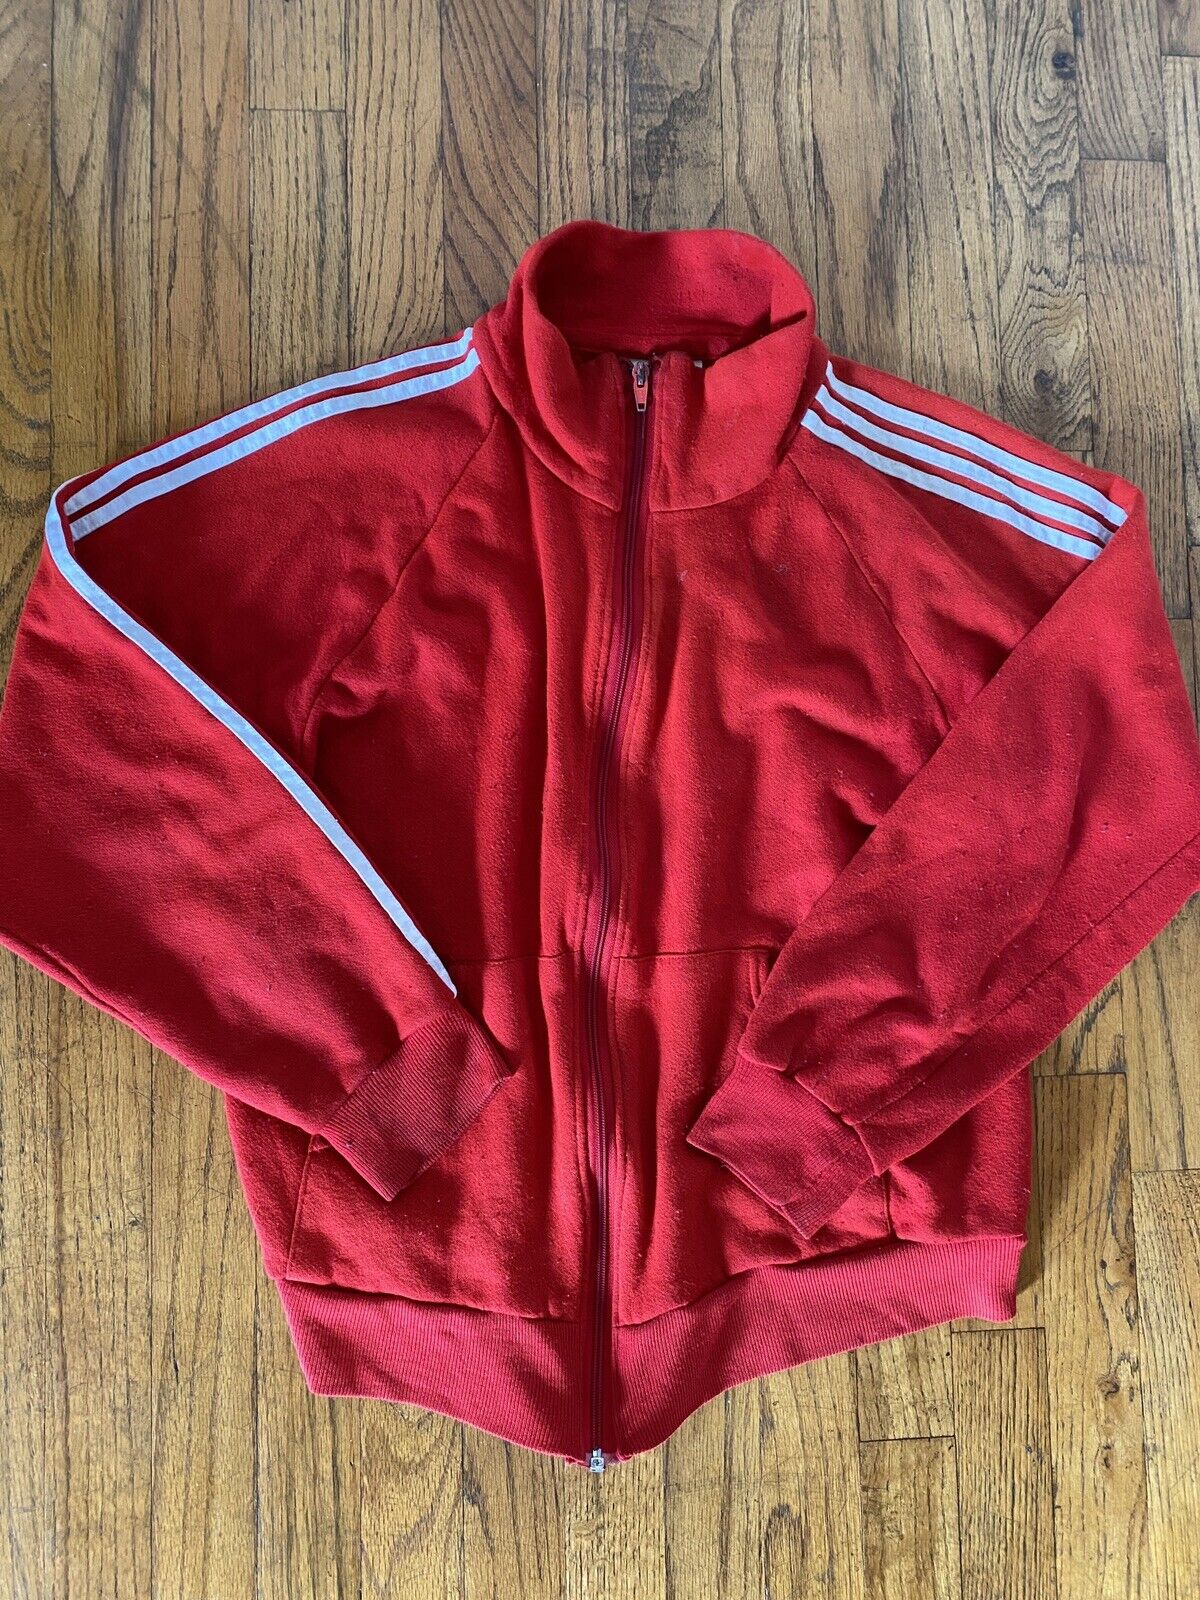 Vintage Red Track Sweatshirt 70s Soffe Zip Up Jacket Three Stripes Medium USA